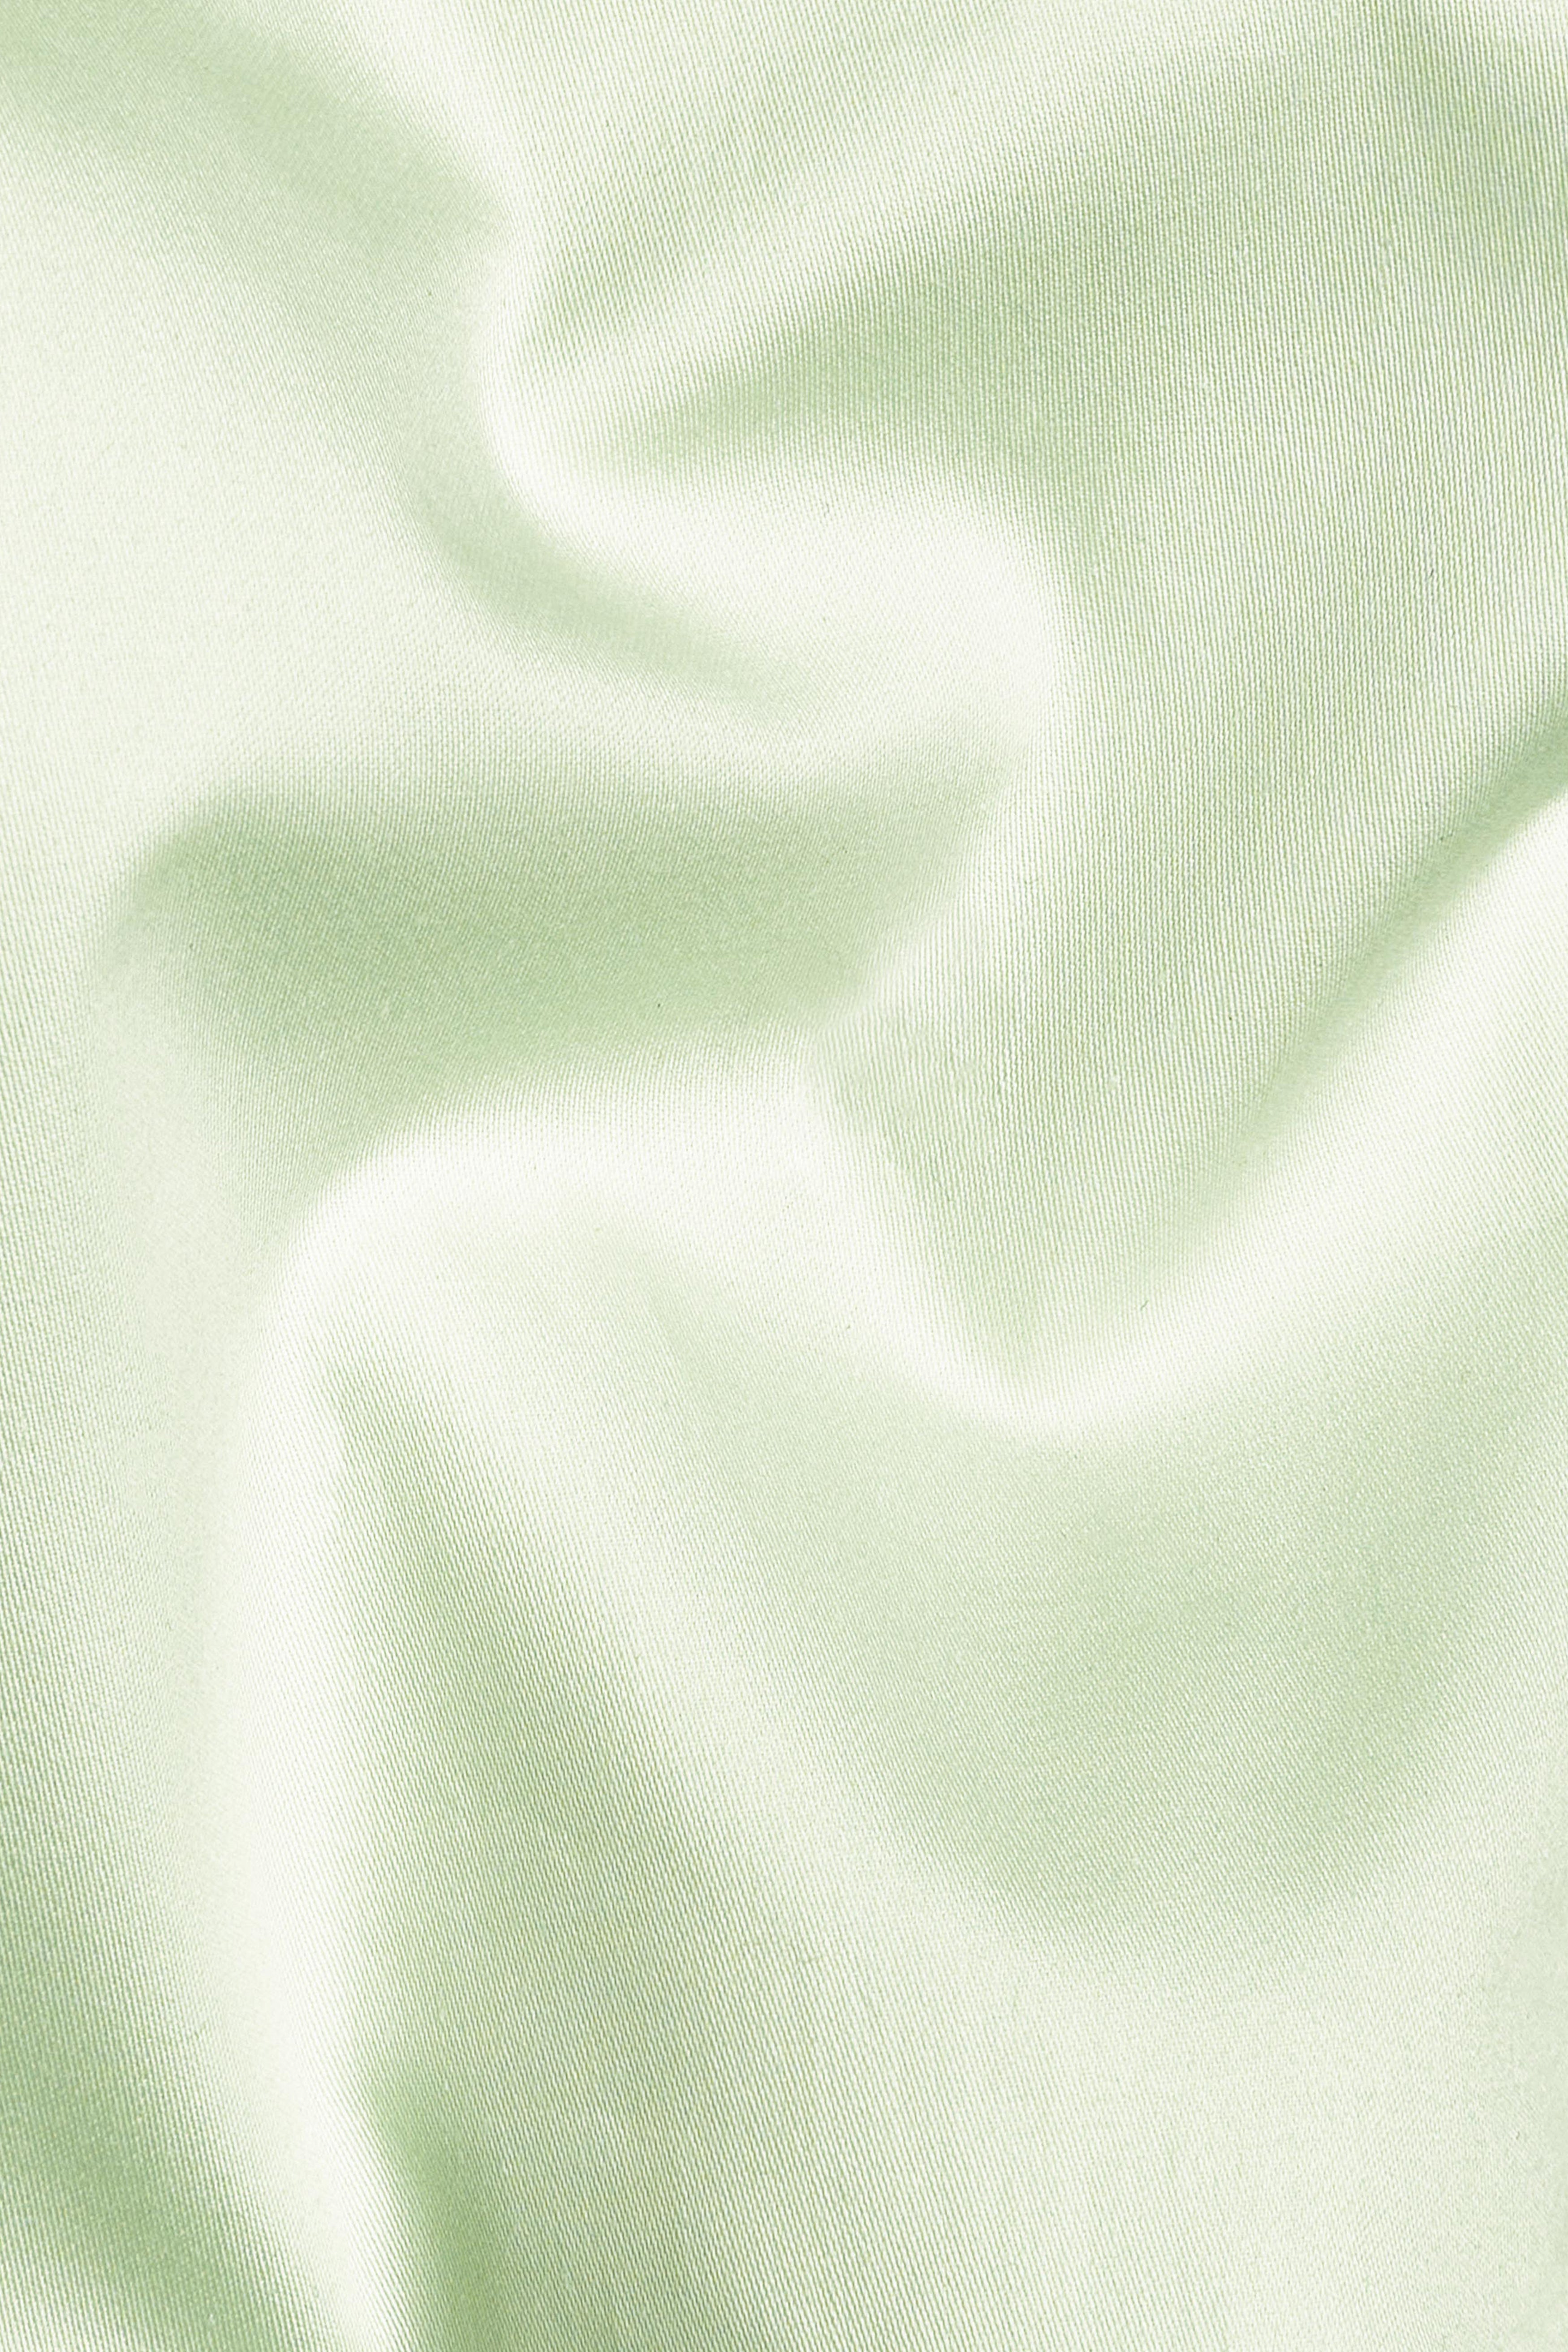 Surf Crest Green Subtle Sheen Super Soft Premium Cotton Kurta Set